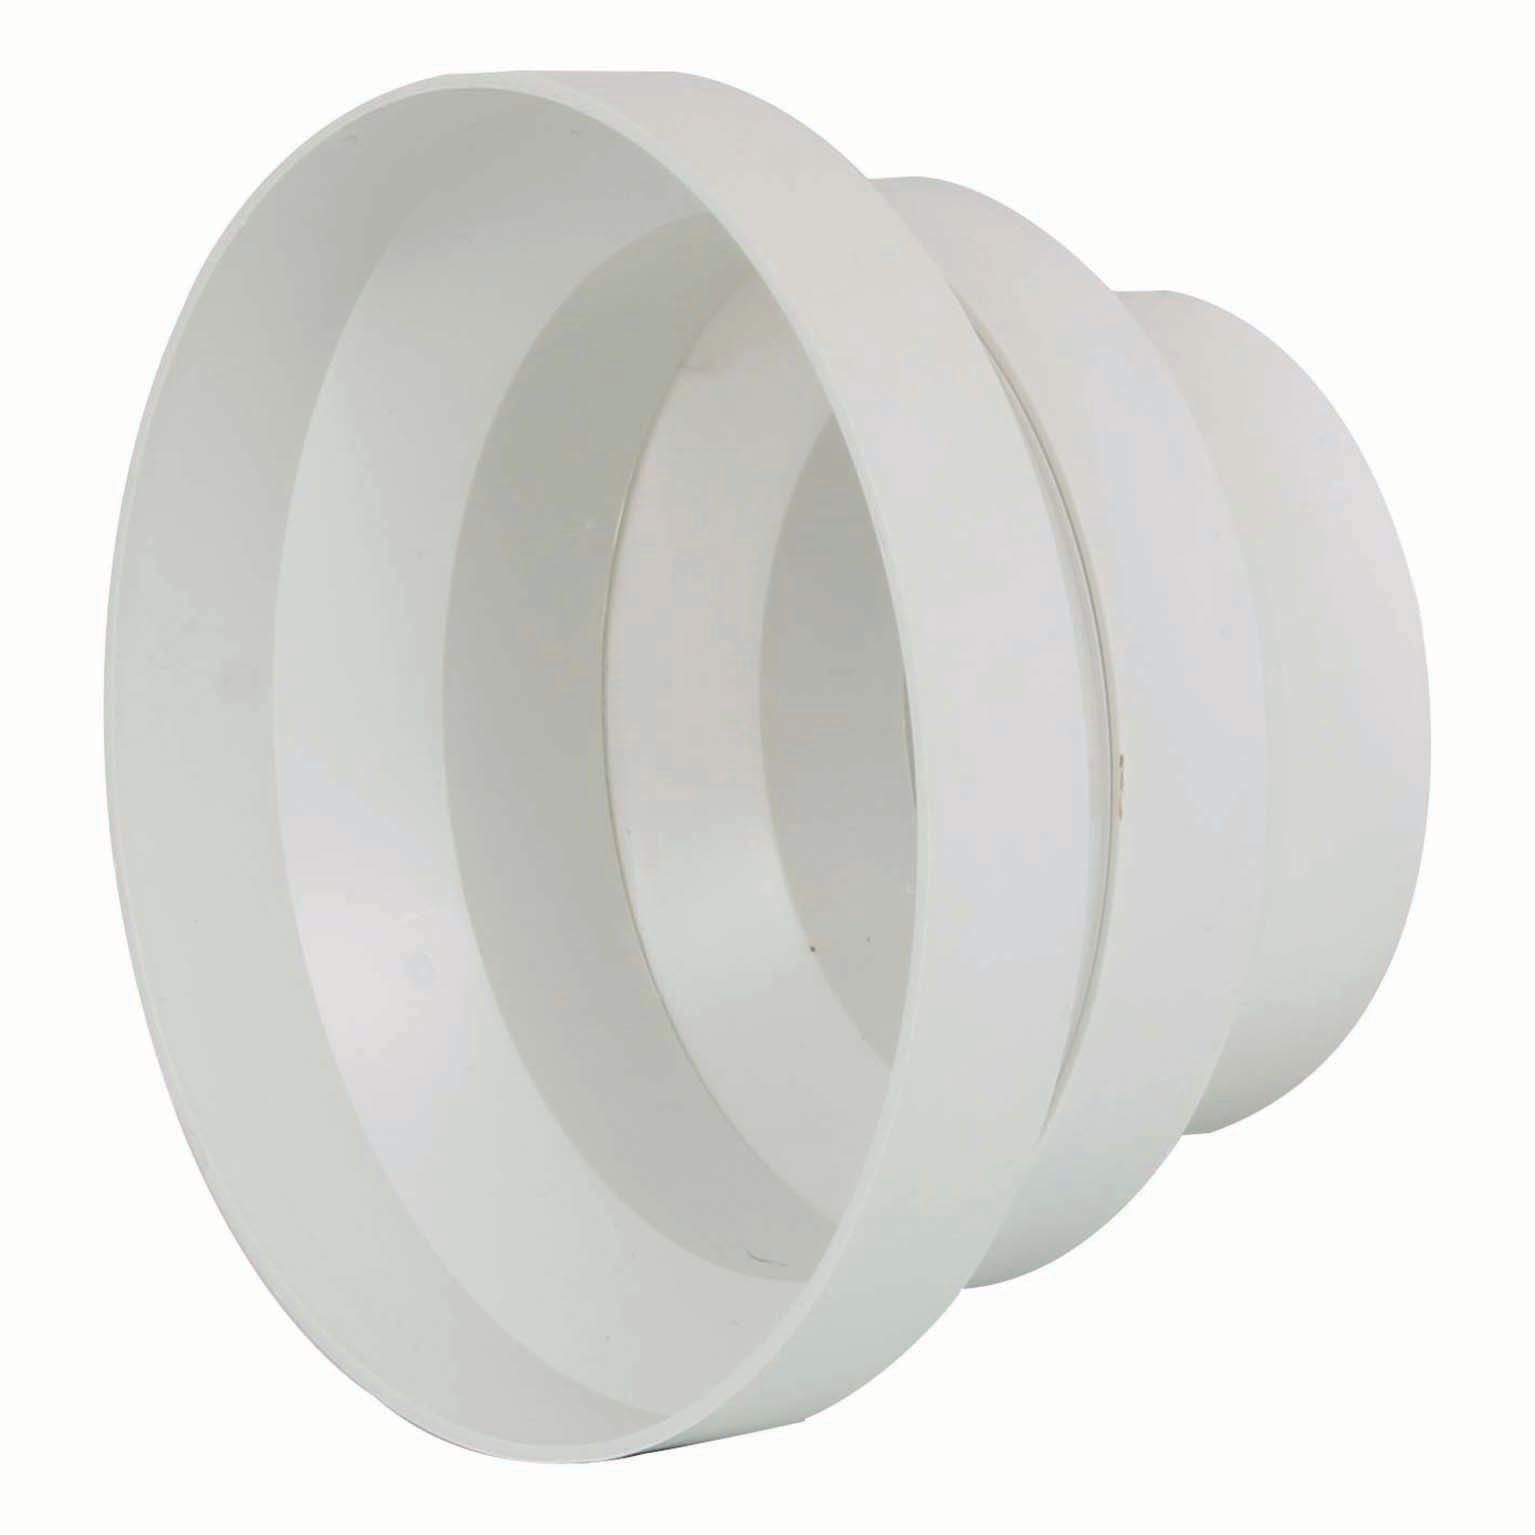 Image of Manrose PVC White Diameter Reducer - 150mm to 125mm to 100mm